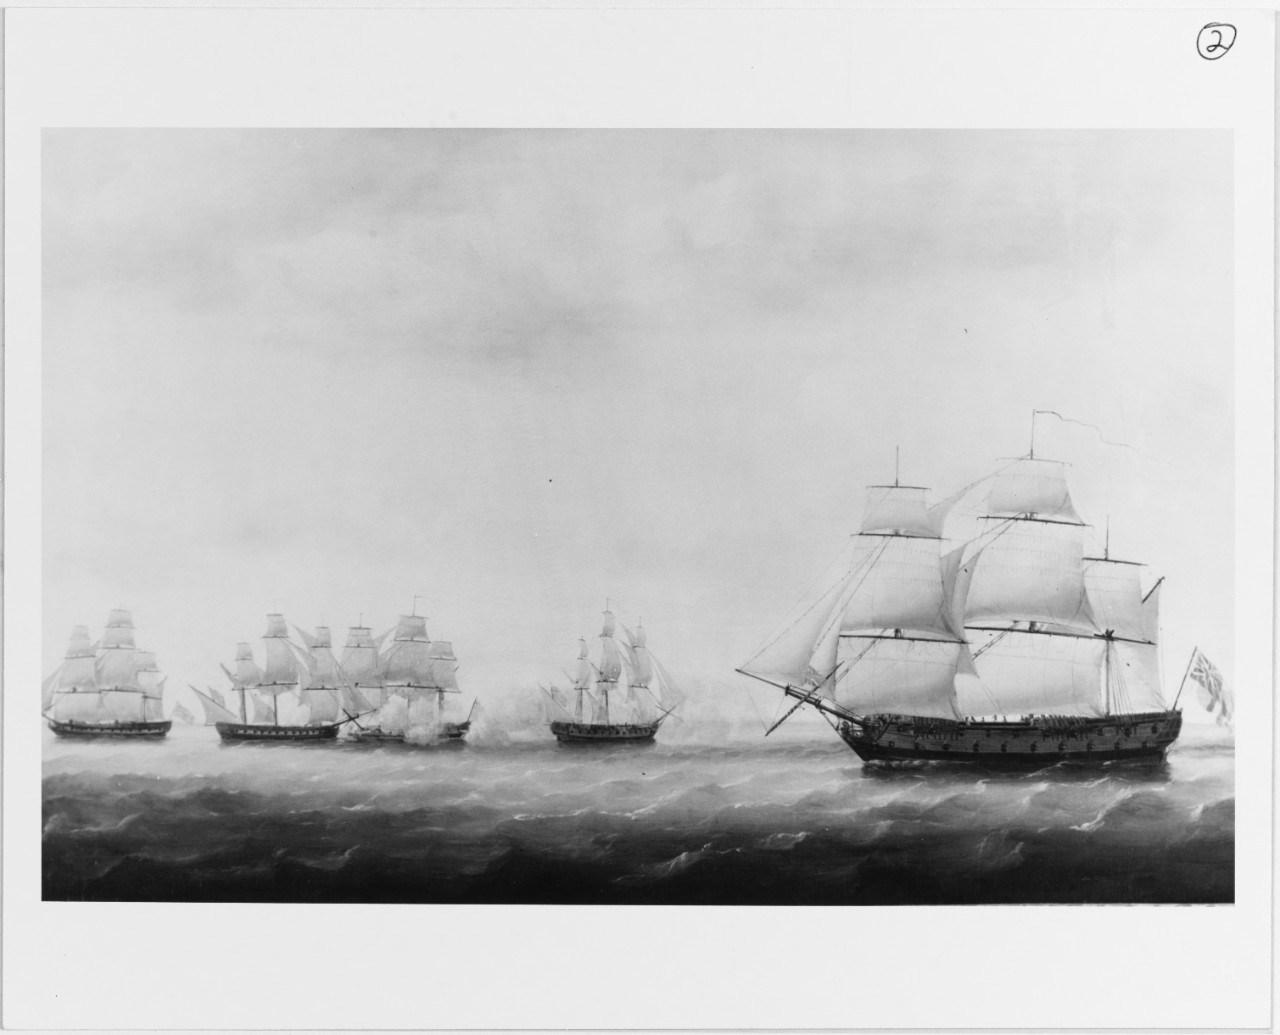 USS BOSTON and HANCOCK vs. HMS FLORA and RAINBOW, 7 July 1777.